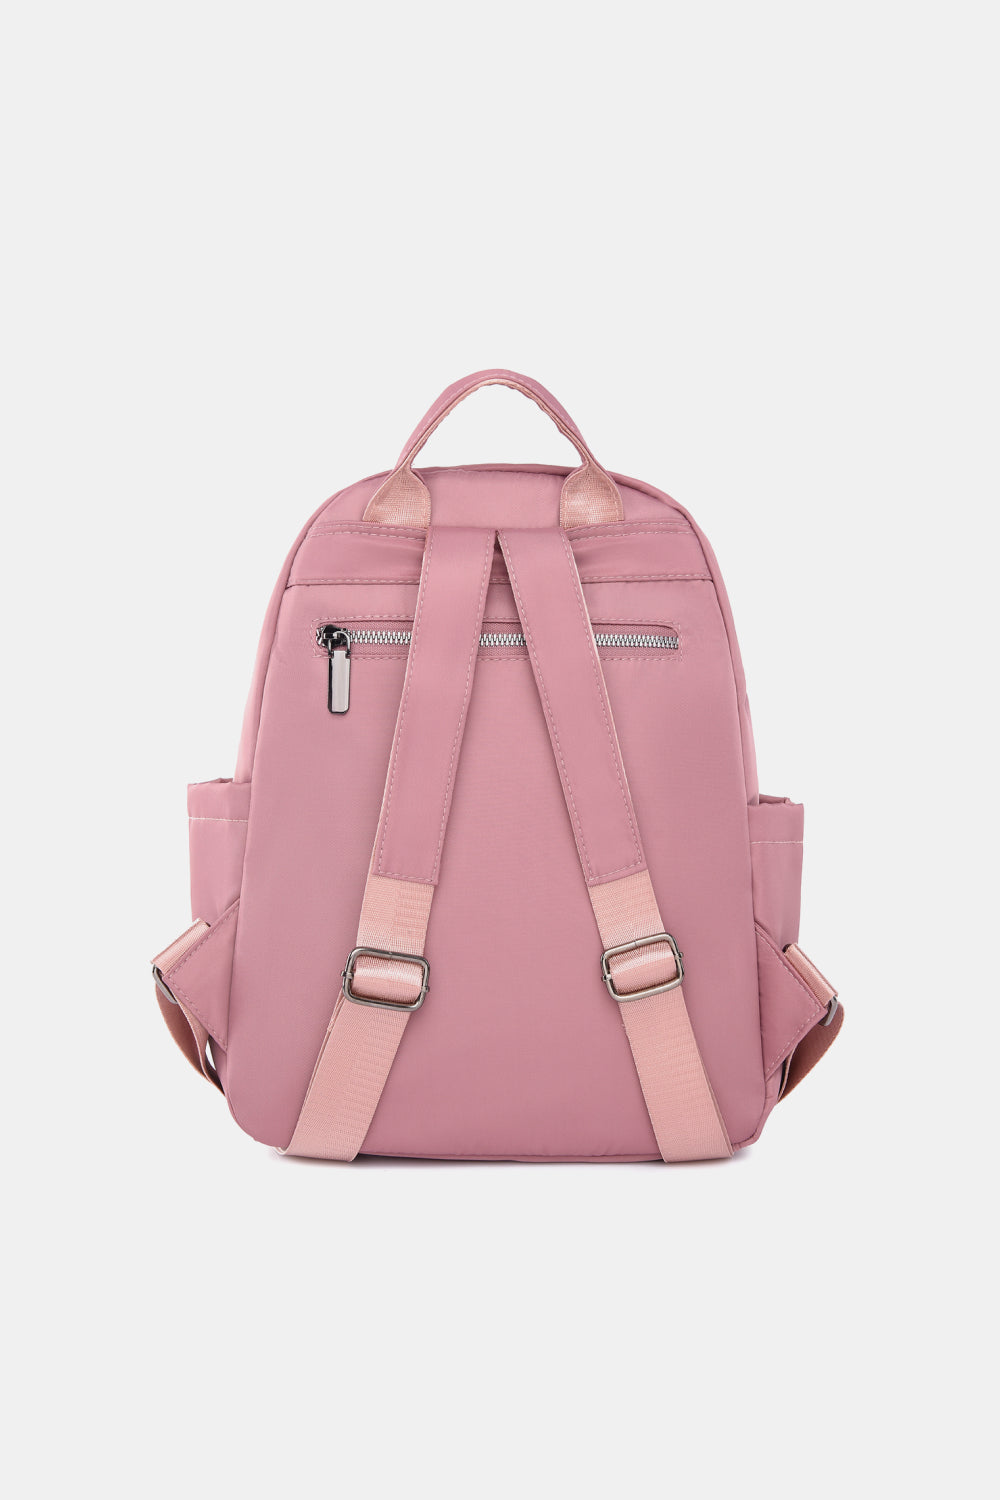 Misty Rose Flawless Medium Nylon Backpack Handbags